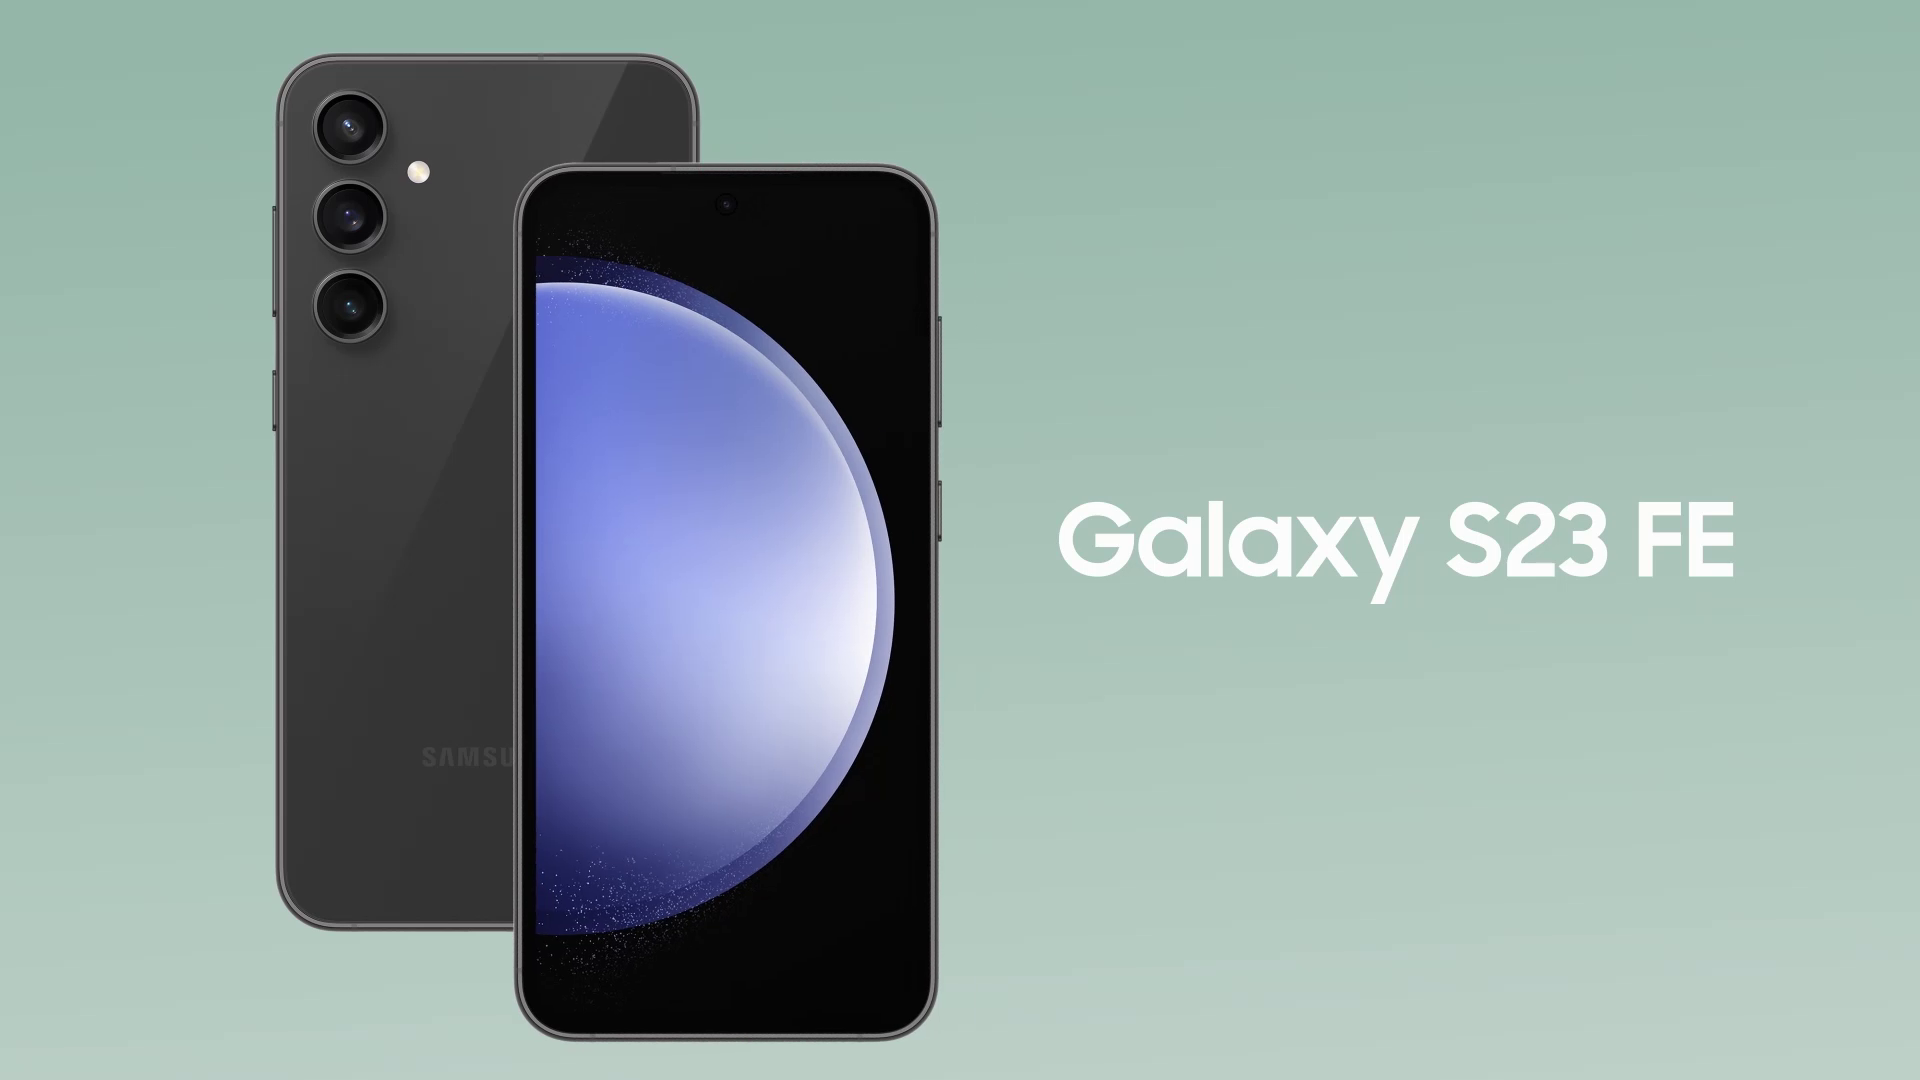 Samsung Galaxy S23 FE – Price, Specs & Reviews